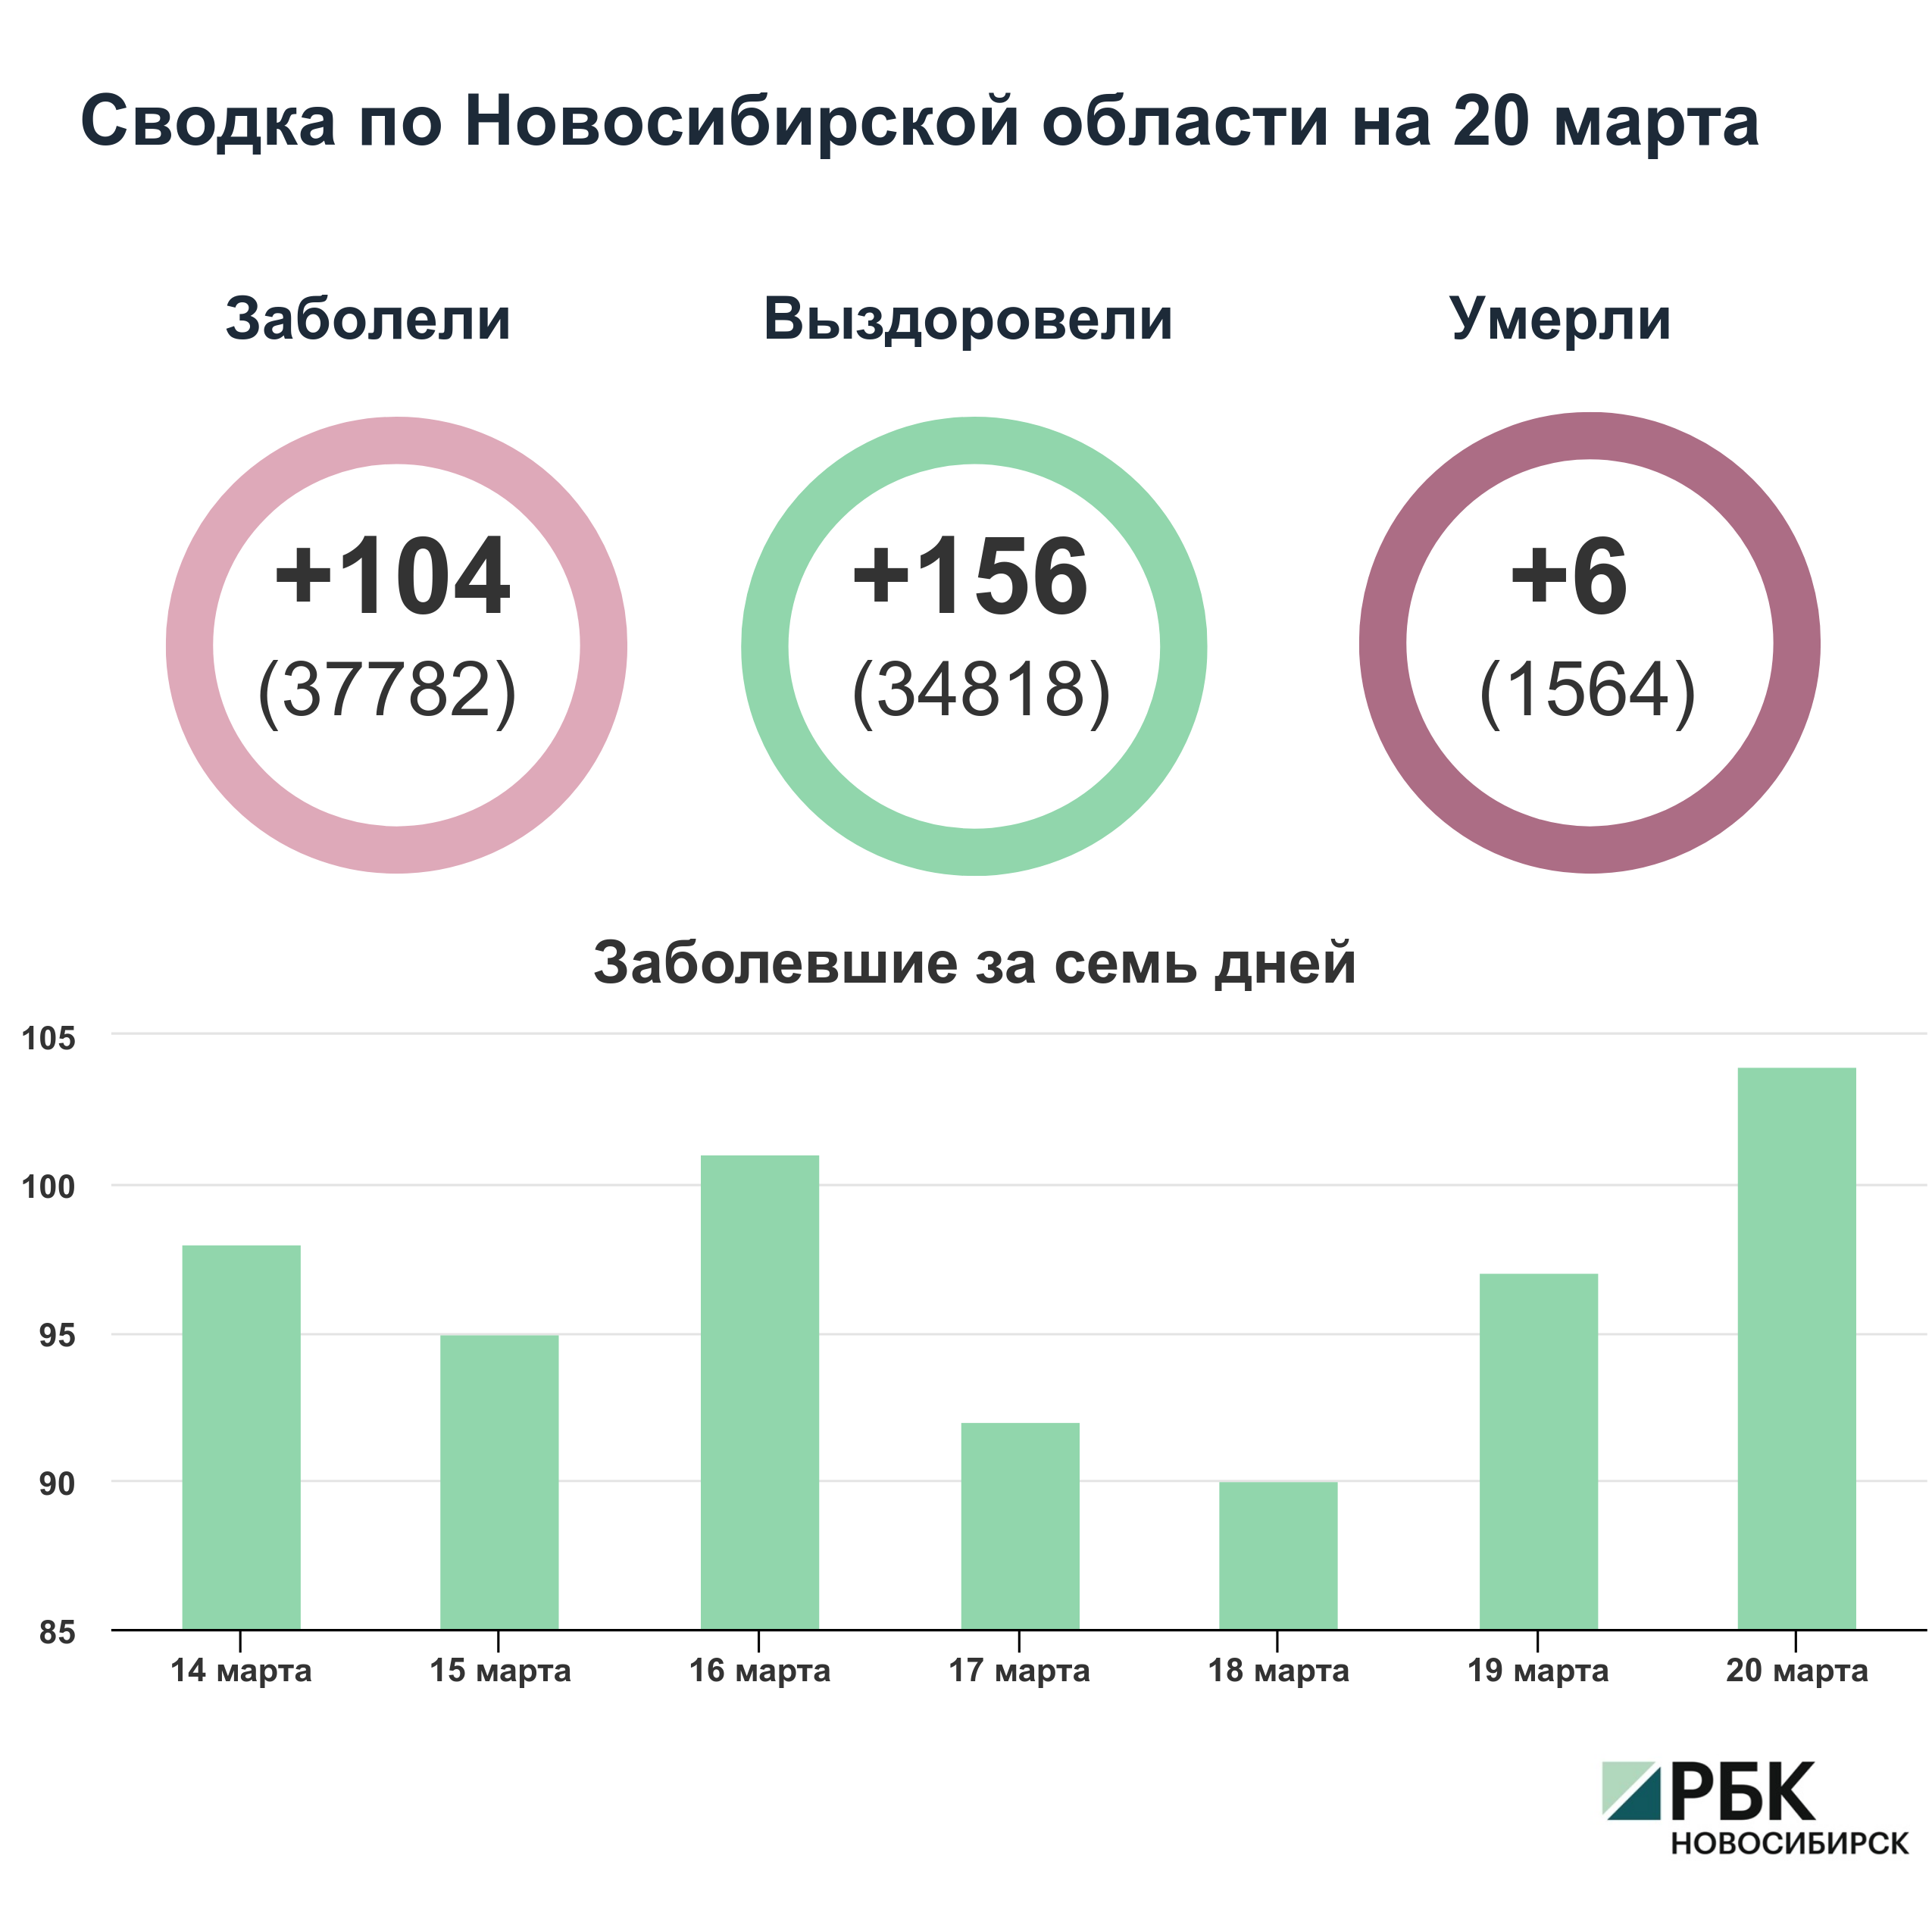 Коронавирус в Новосибирске: сводка на 20 марта